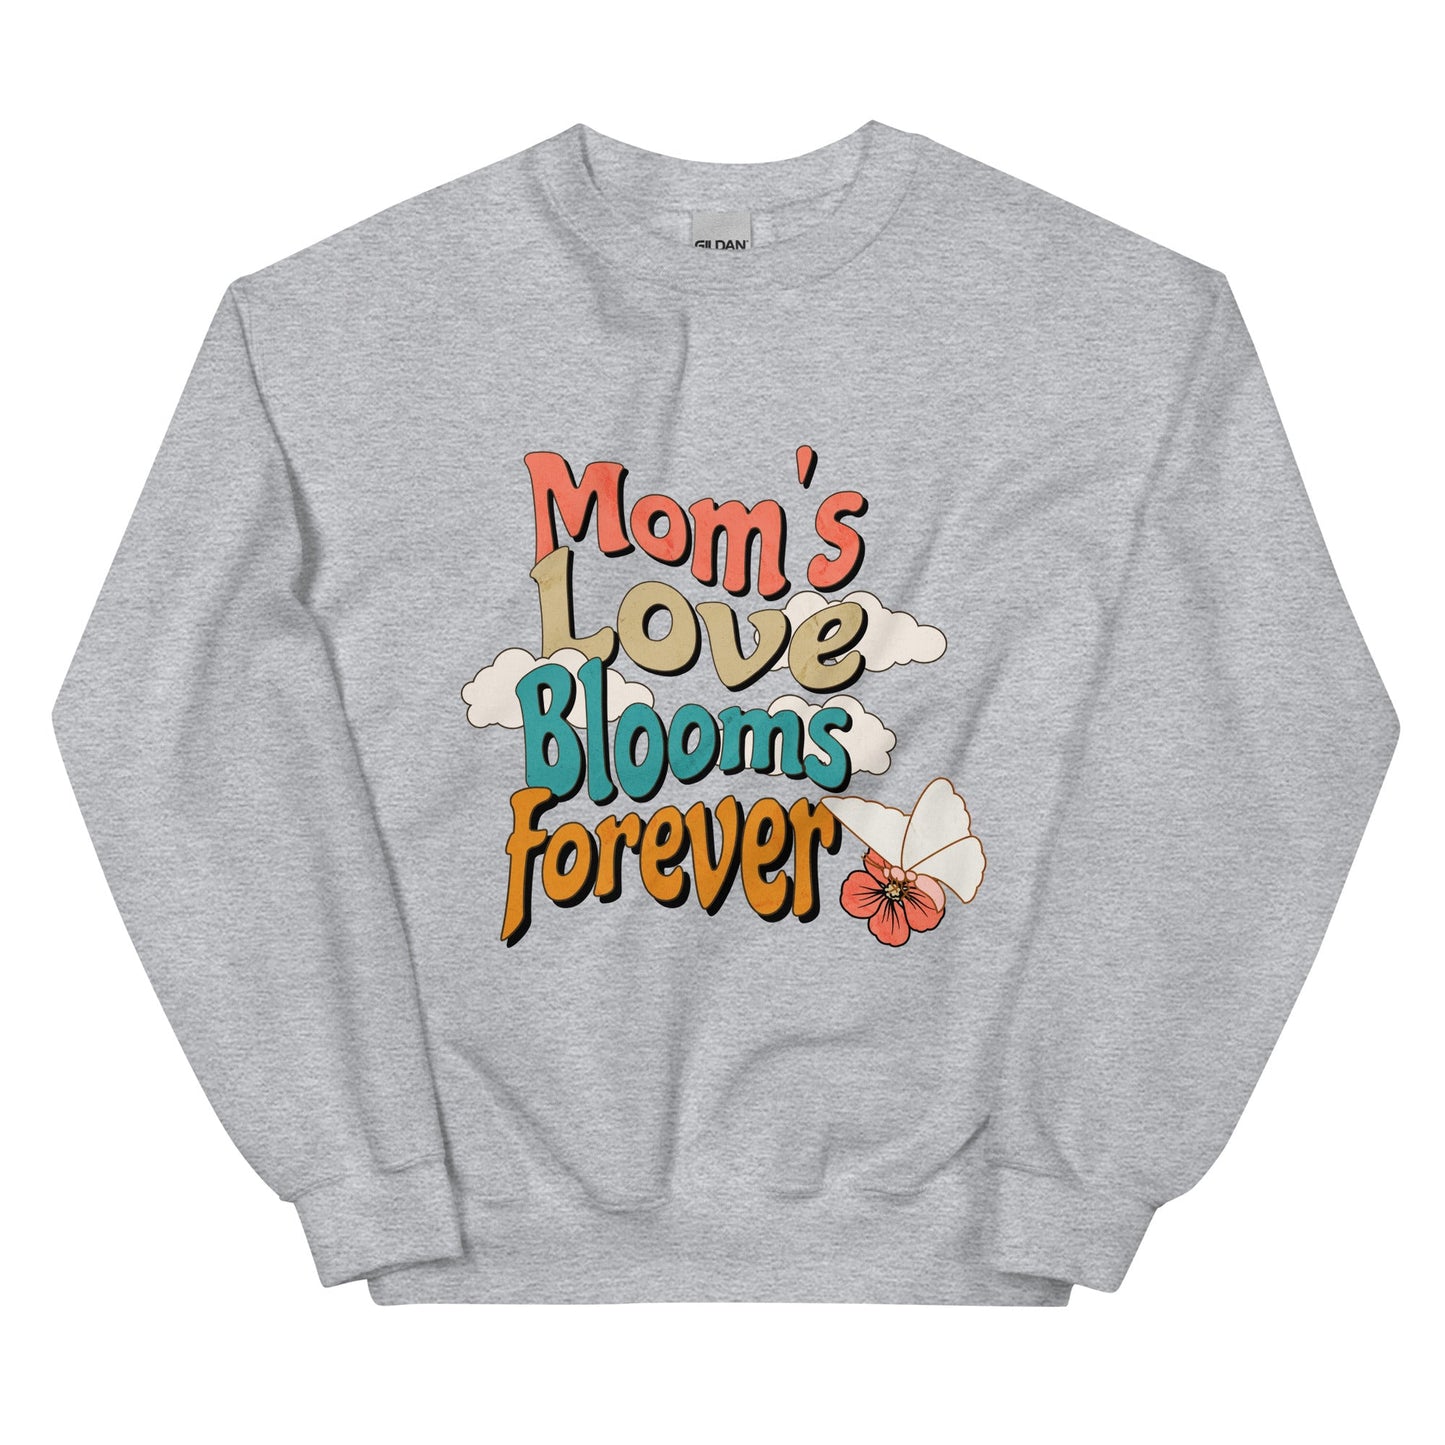 Mom's Love Blooms Forever Sweatshirt-Sport Grey-S-mysticalcherry